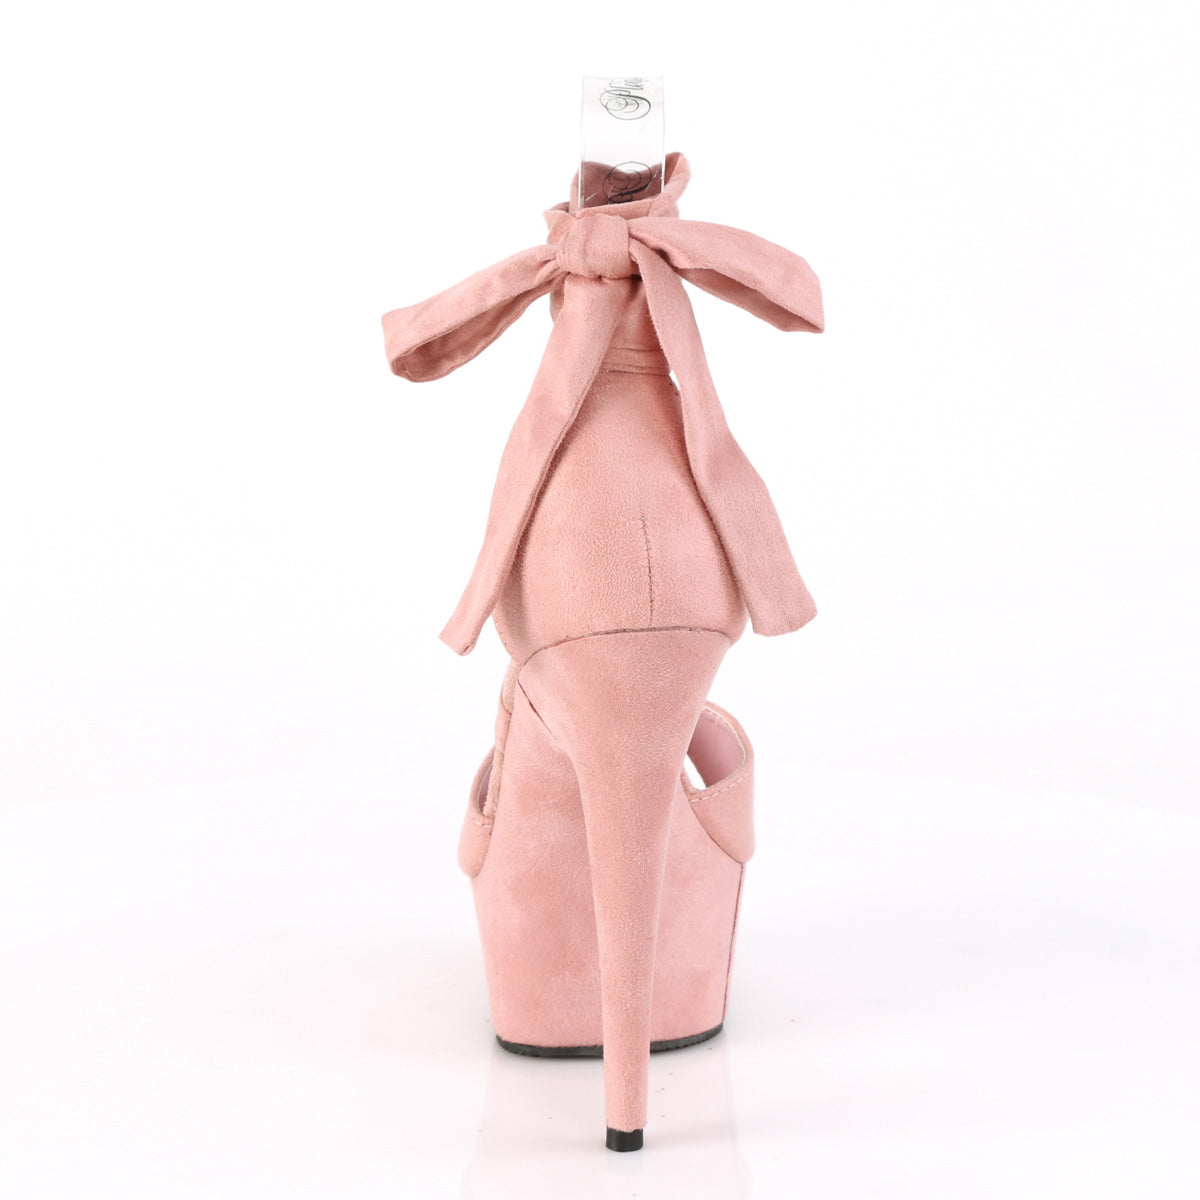 DELIGHT-679 Pleaser 6" Heel Baby Pink Pole Dancing Platforms-Pleaser- Sexy Shoes Fetish Footwear